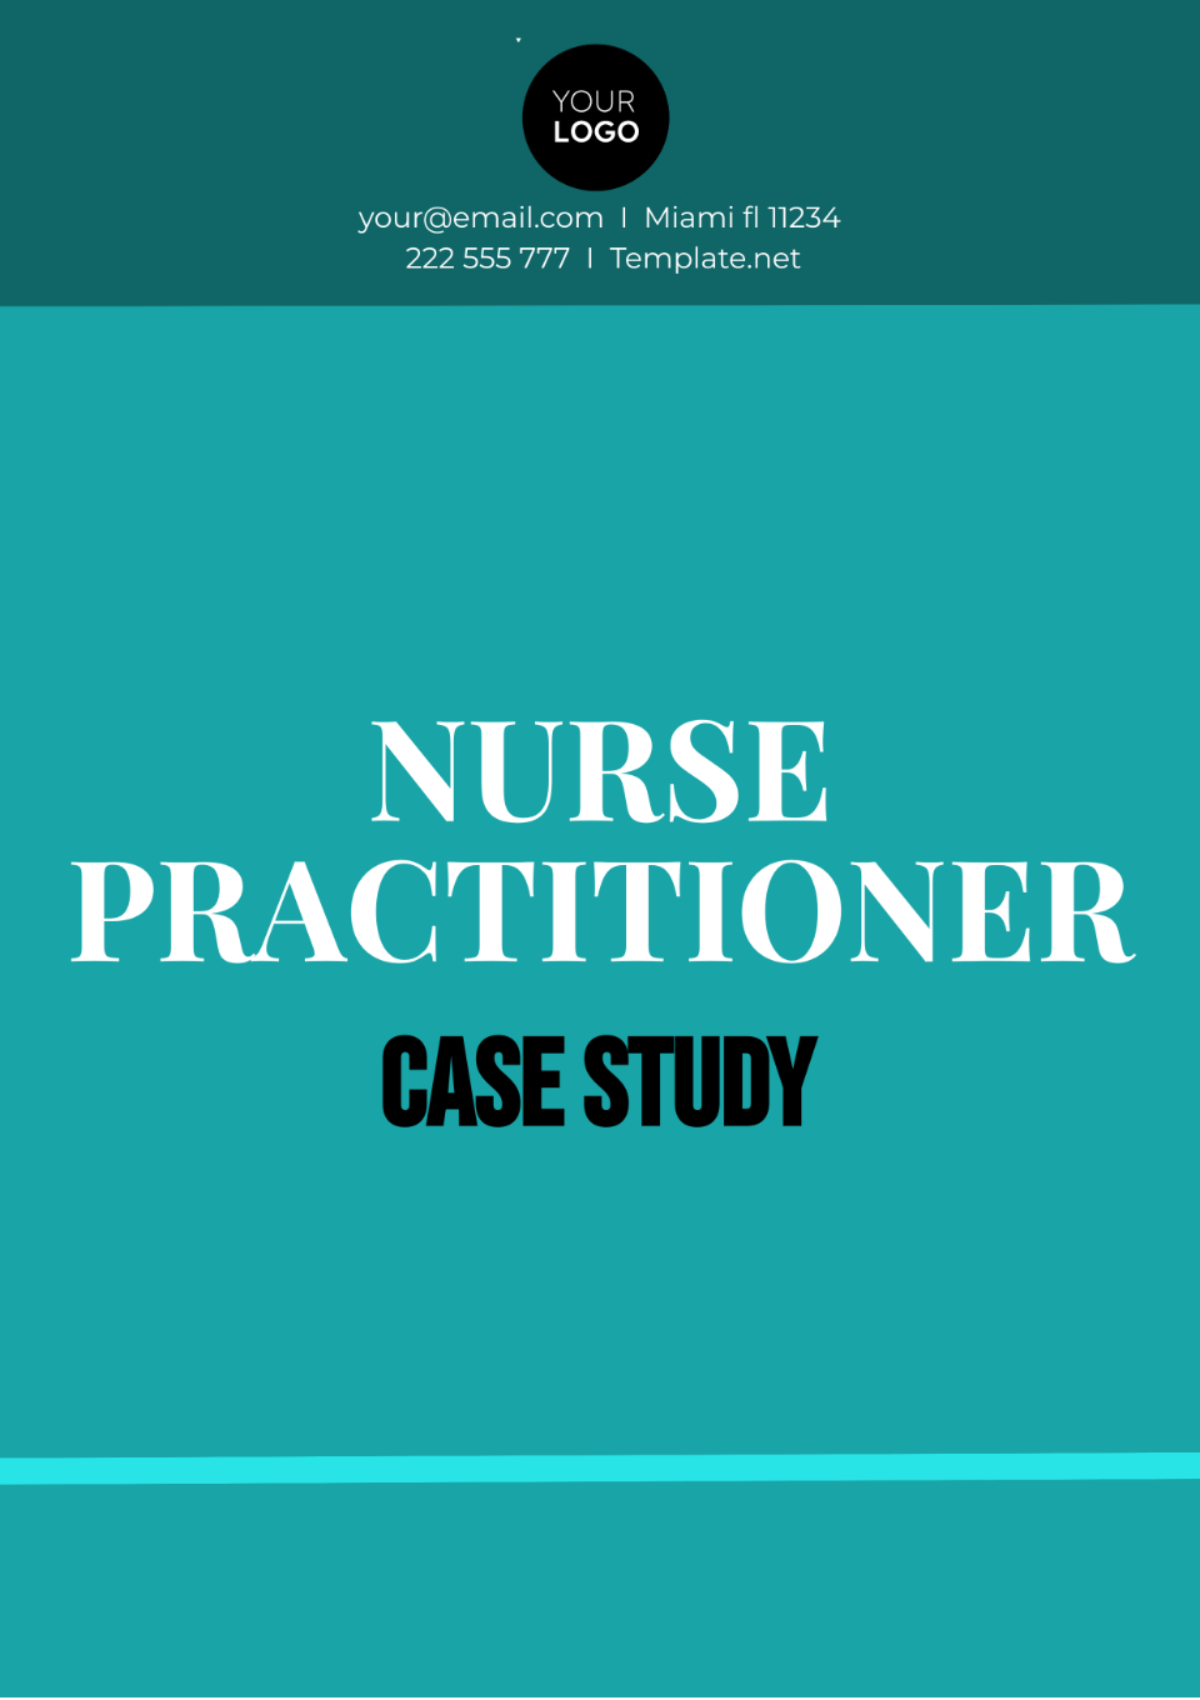 Nurse Practitioner Case Study Template